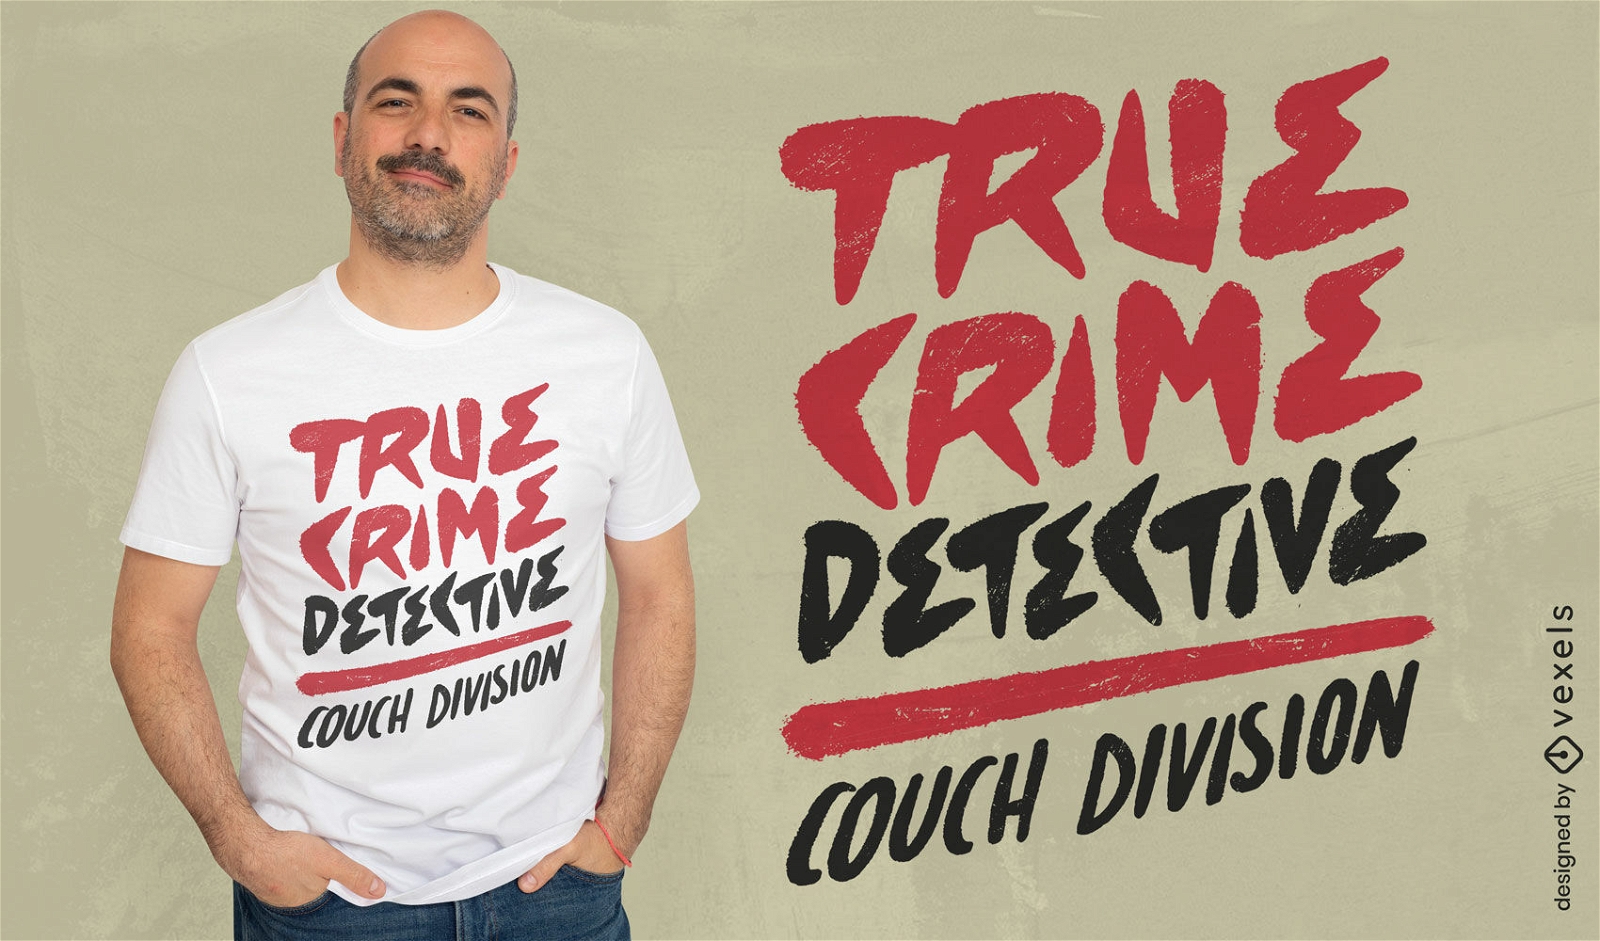 True crime detective hobby t-shirt design